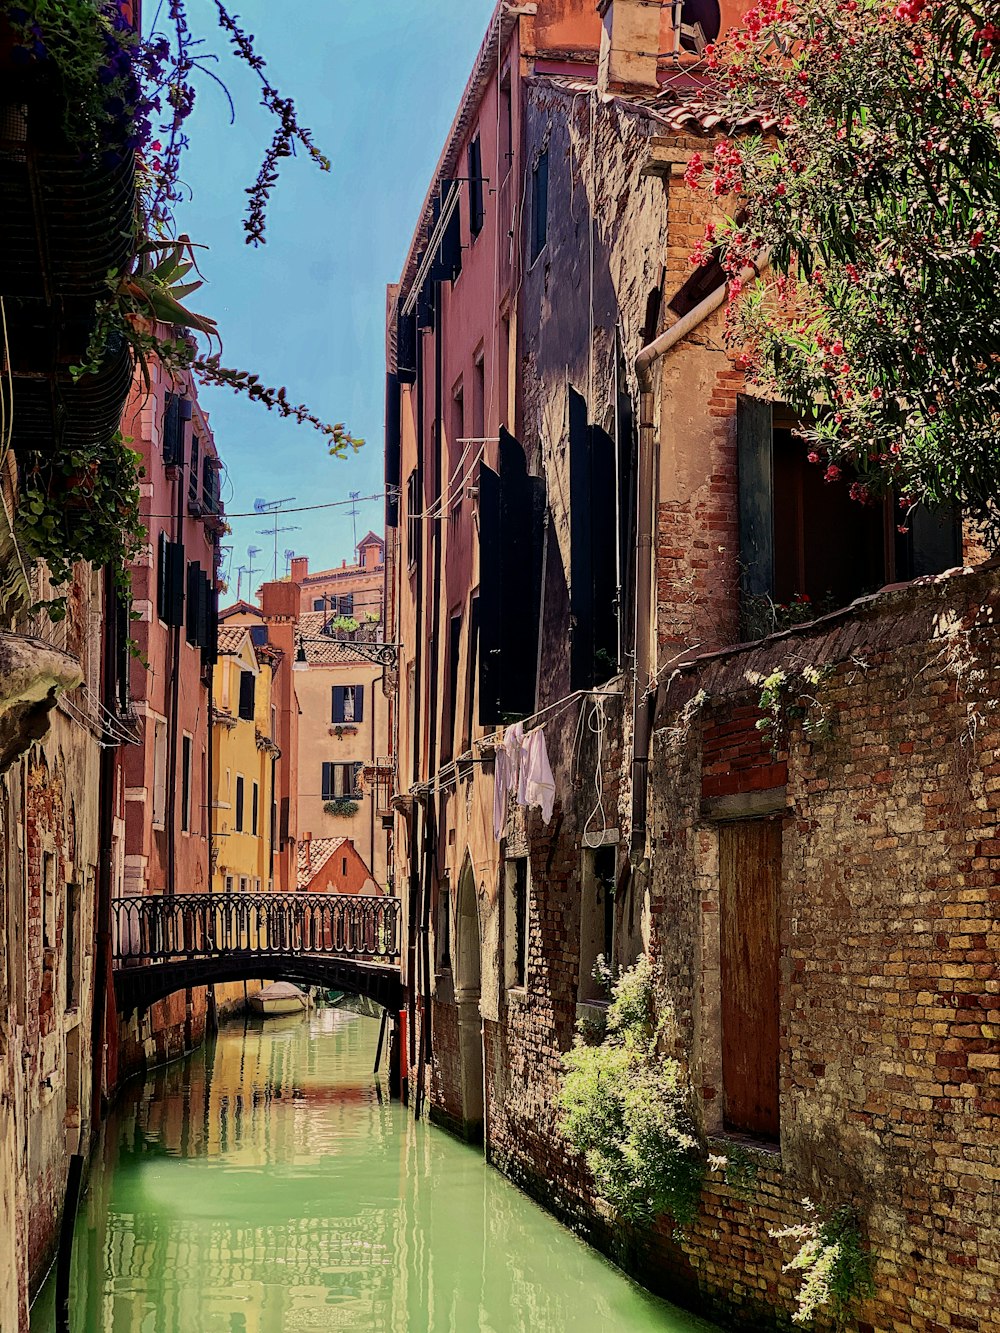 river between brown brick buildings during daytime